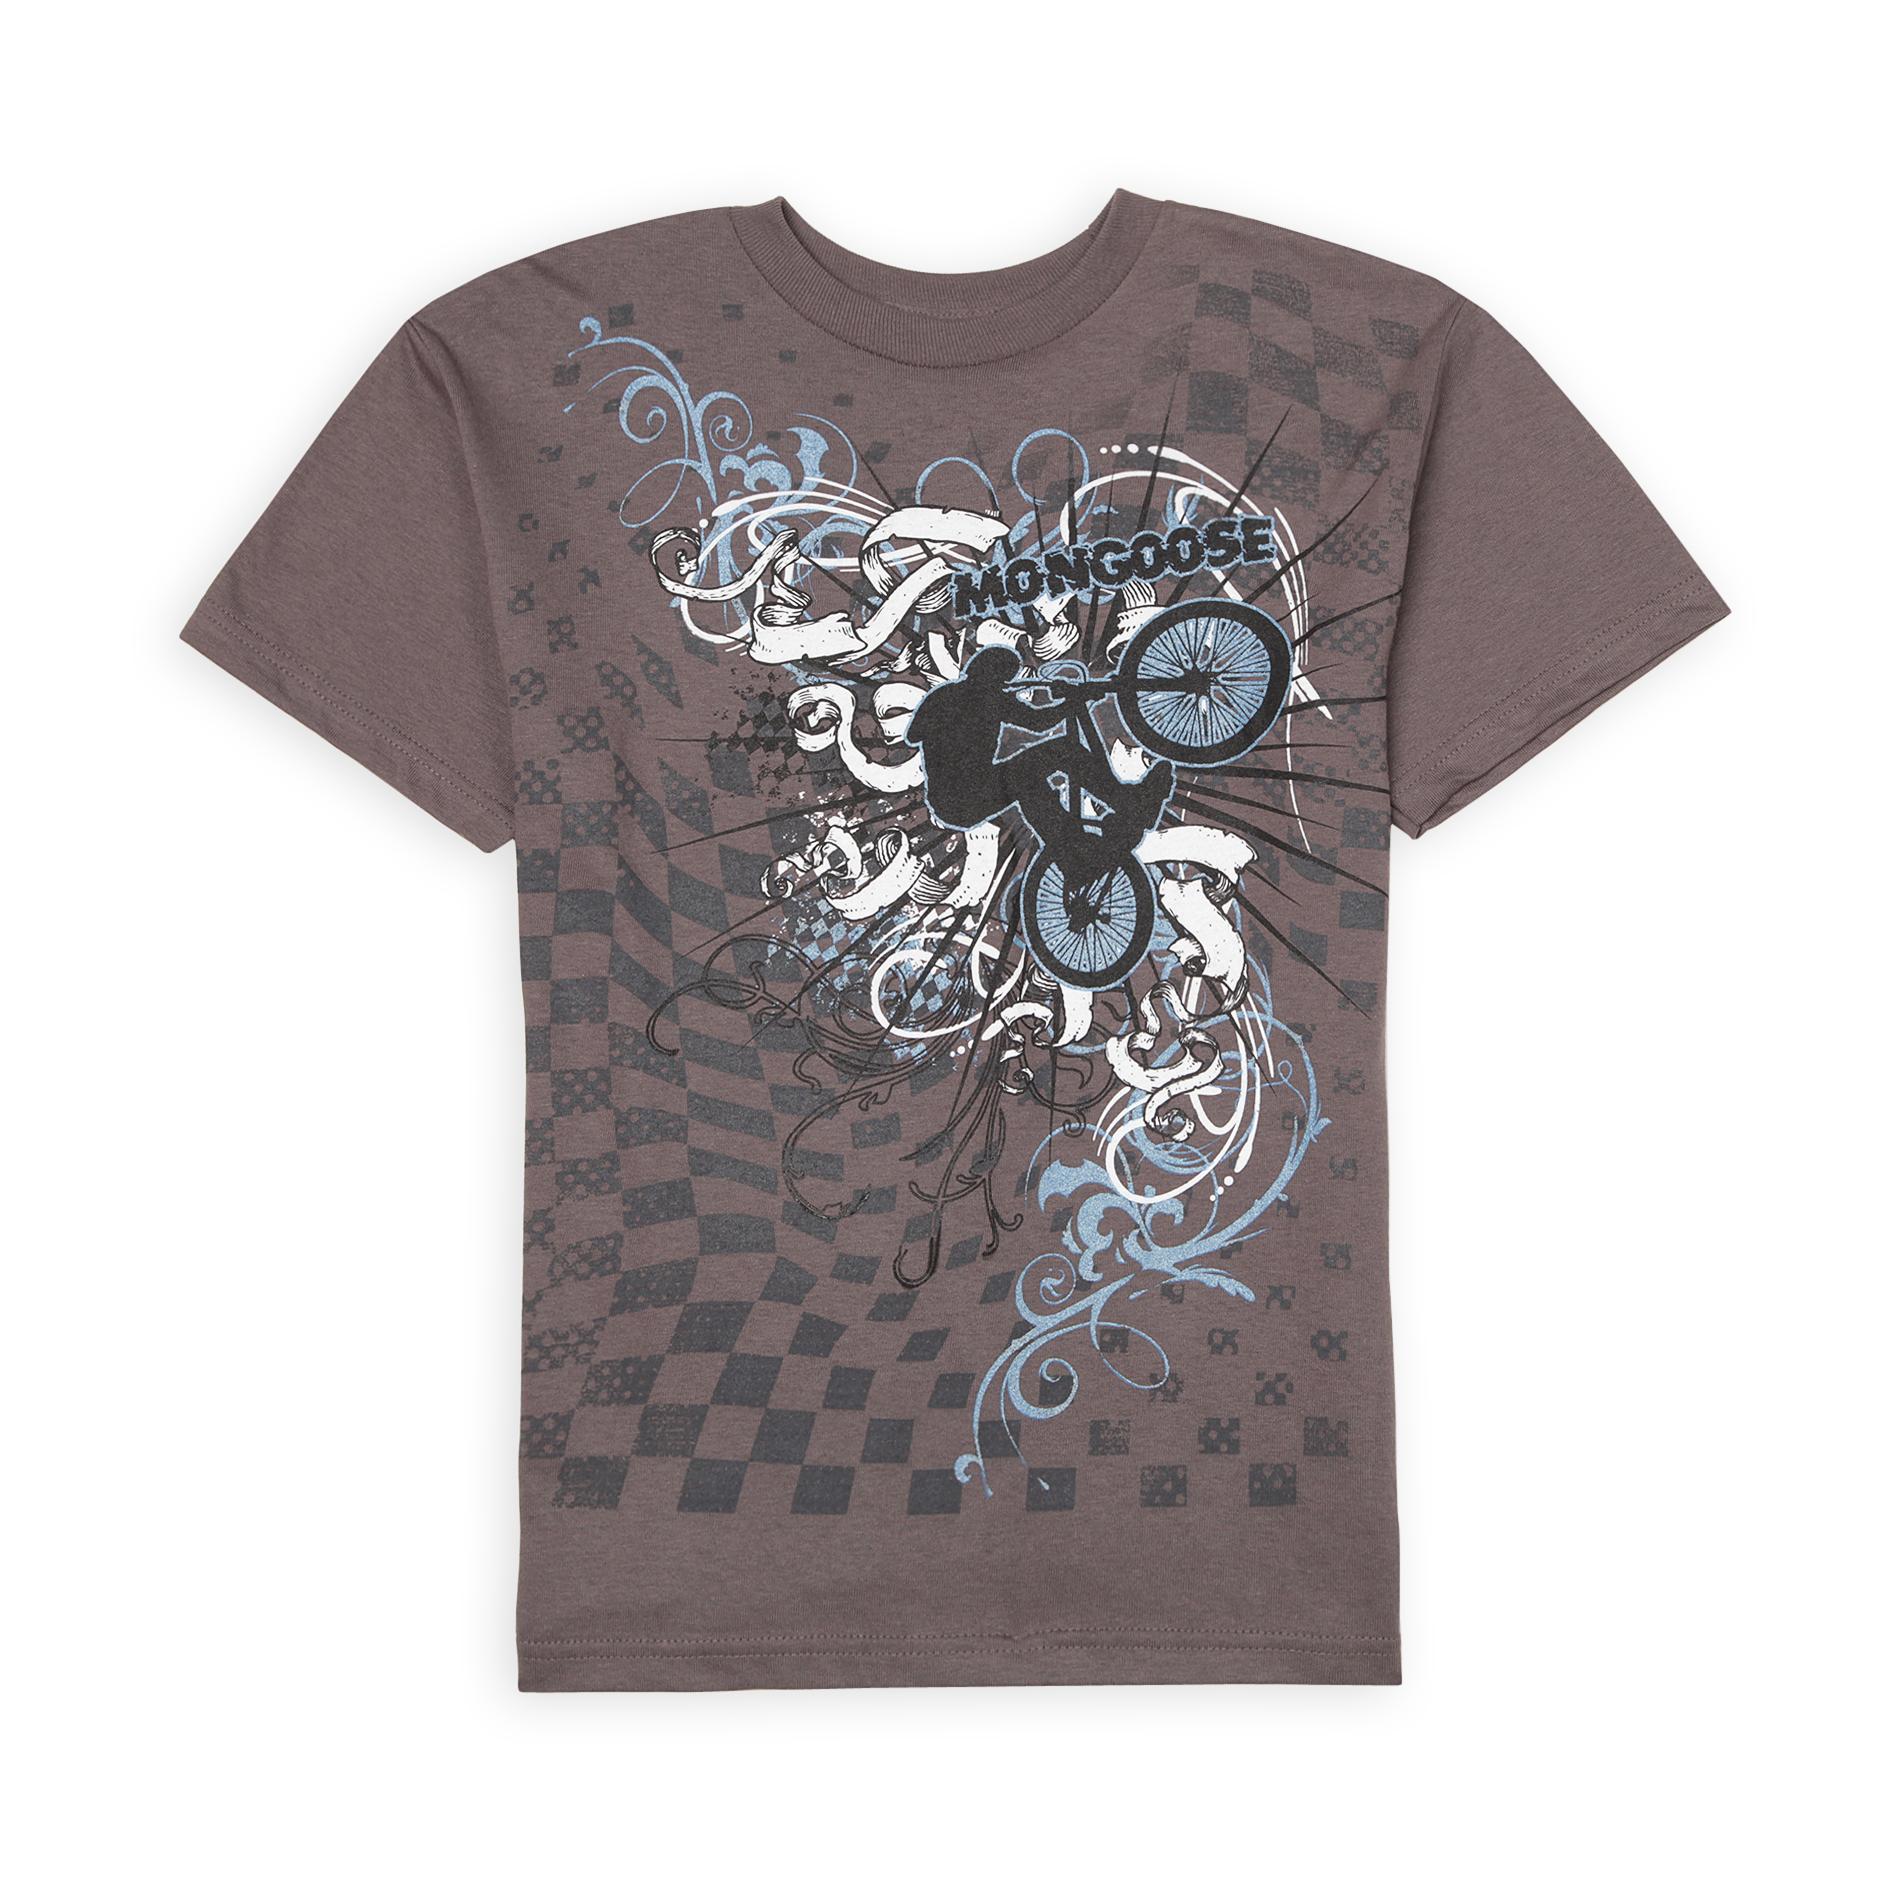 Mongoose Boy's Graphic T-Shirt - Biker